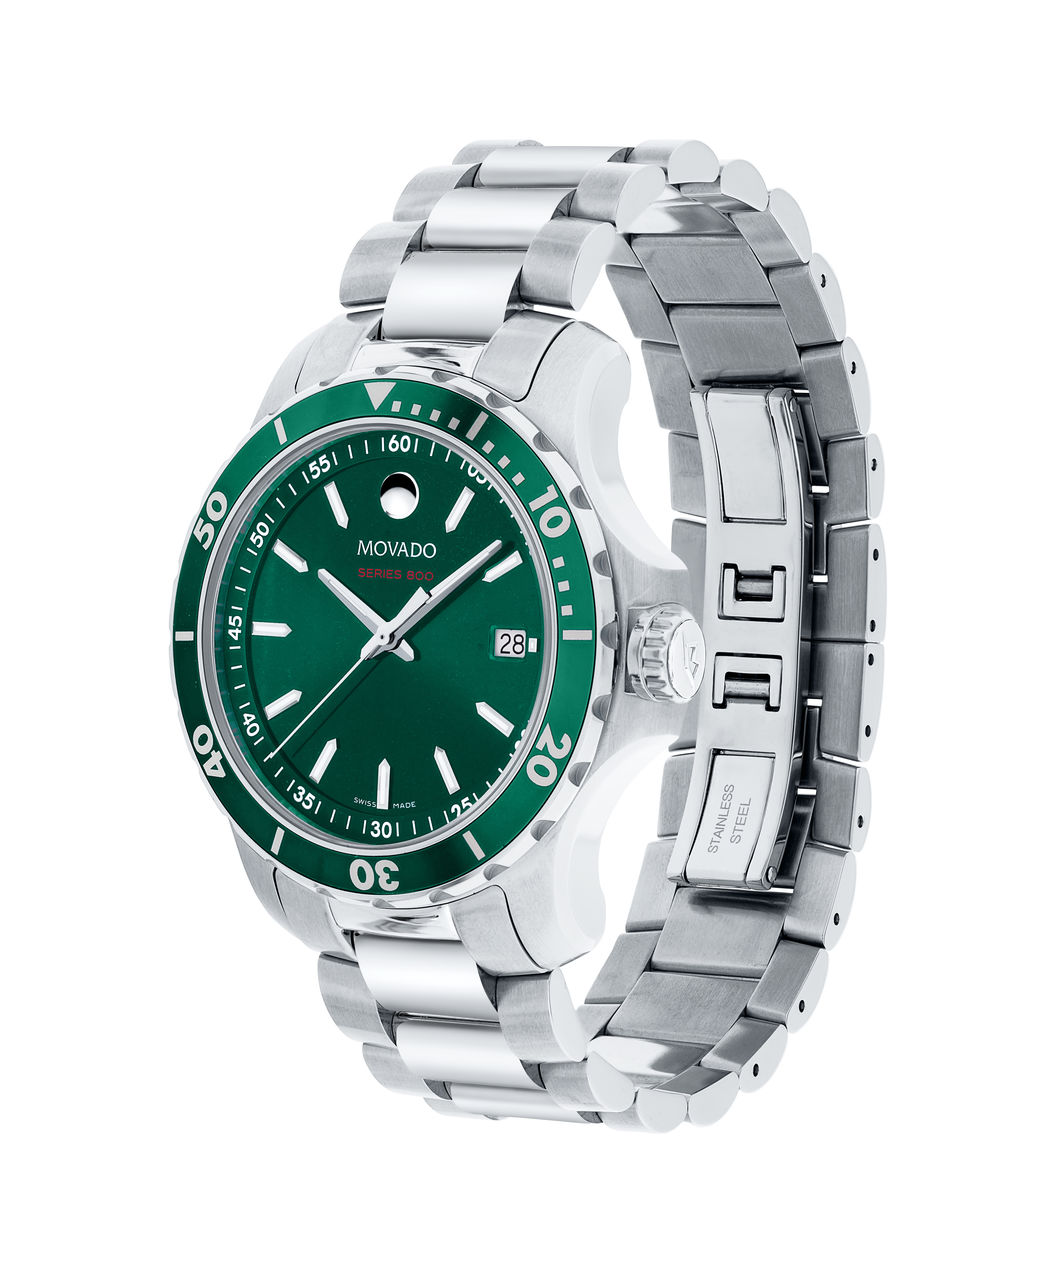 Series 800 Green Steel 2600136 - Movado Mens wrist watch